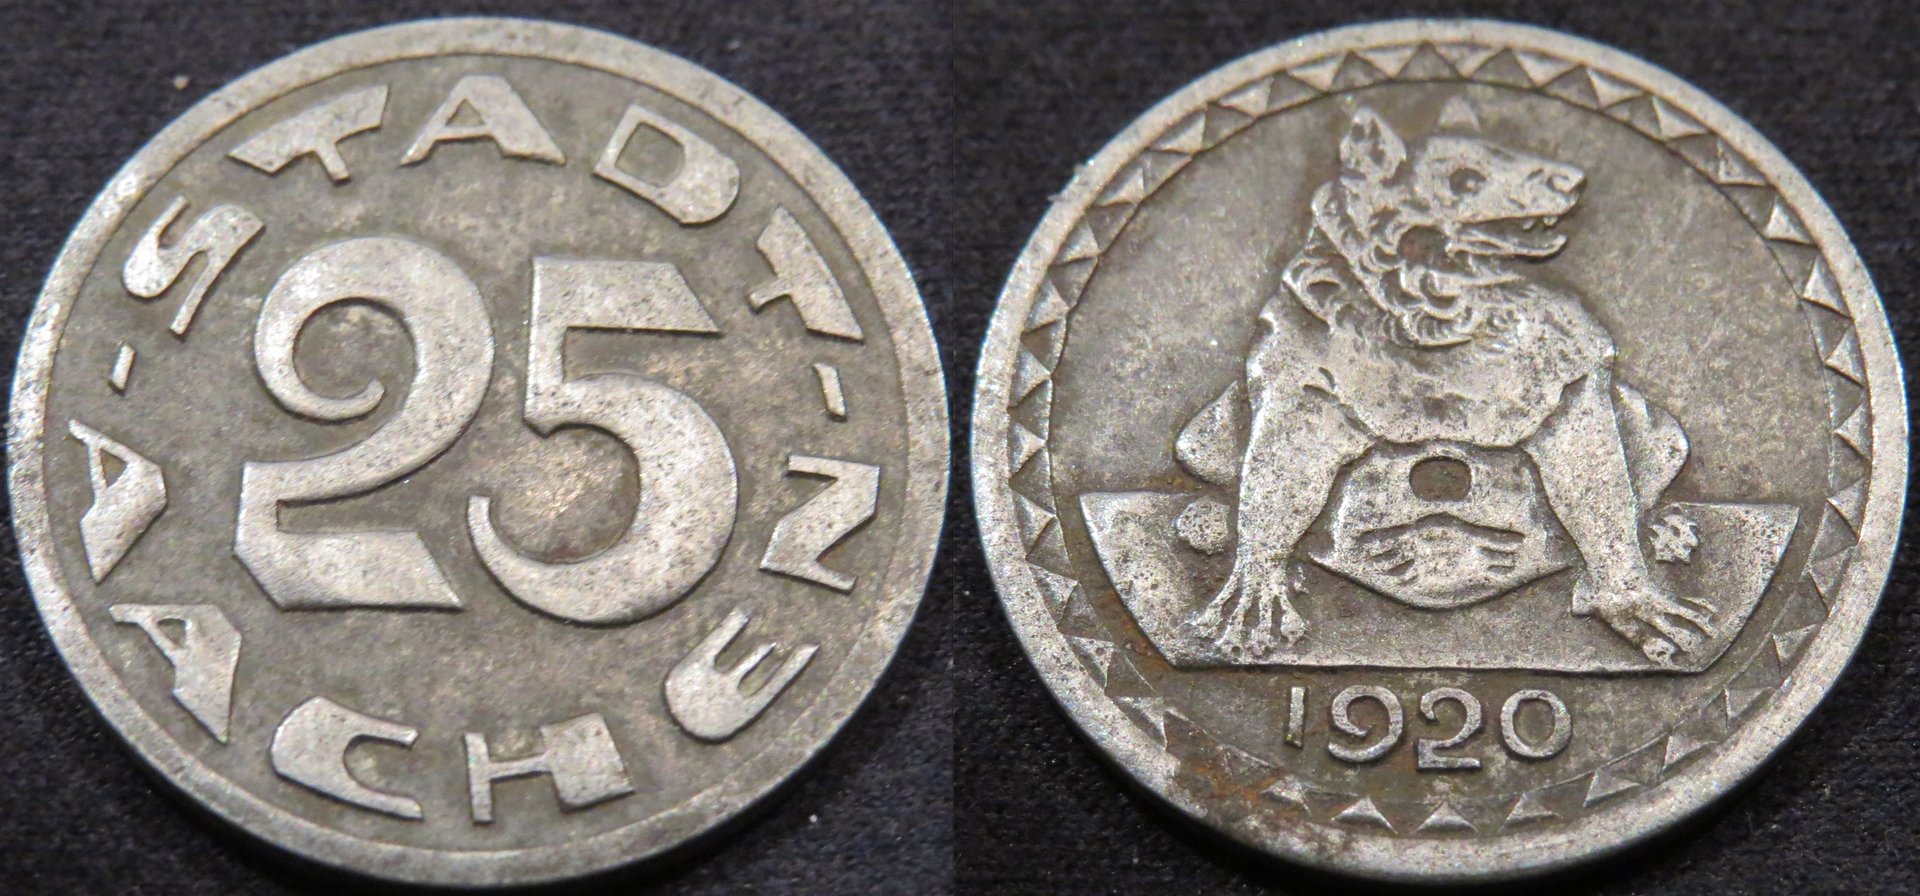 Aachen 1920 25 Pfennig copy.jpeg